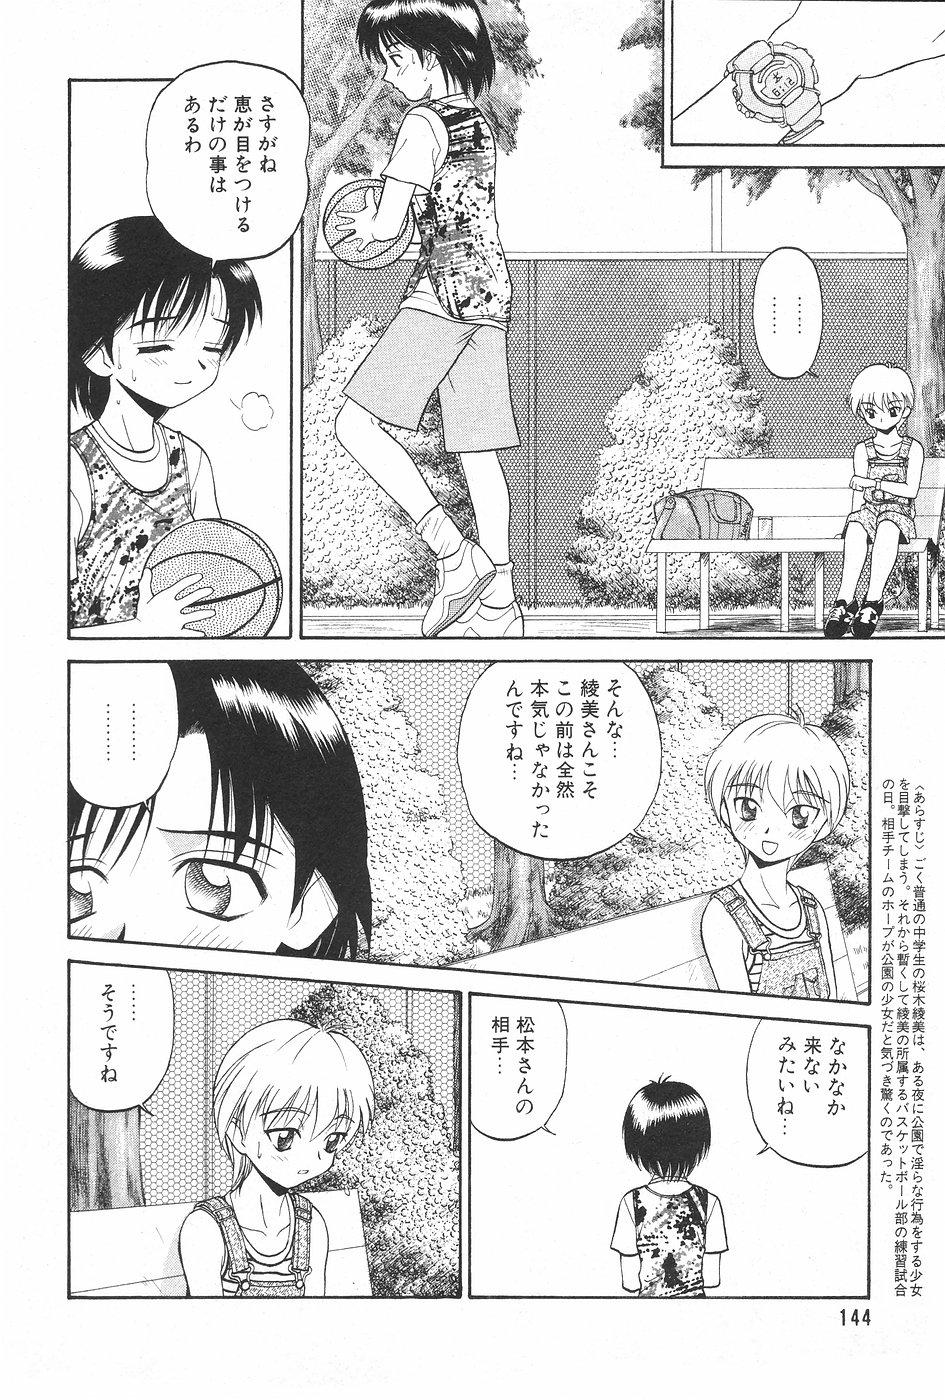 Manga Hotmilk 1997-05 143